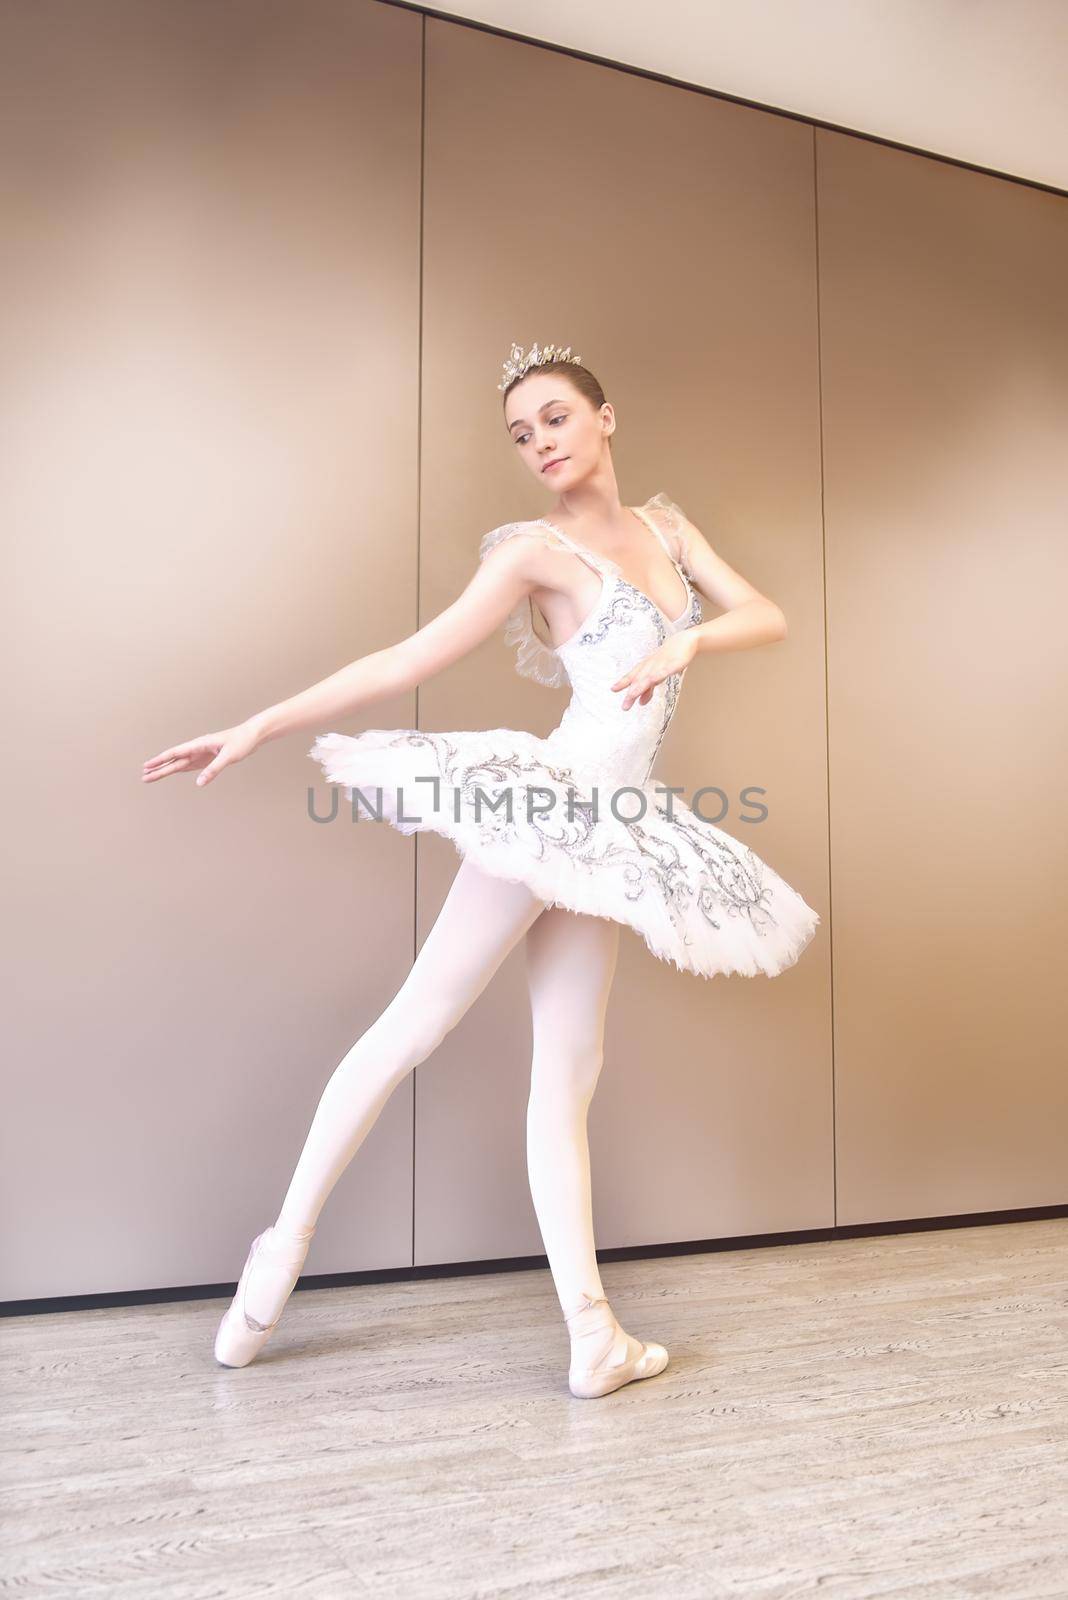 caucasian ballet dancer practice ballet positions in professional tutu skirt of white swan. young beautiful woman ballet dancer in tutu practice ballet positions by Nickstock